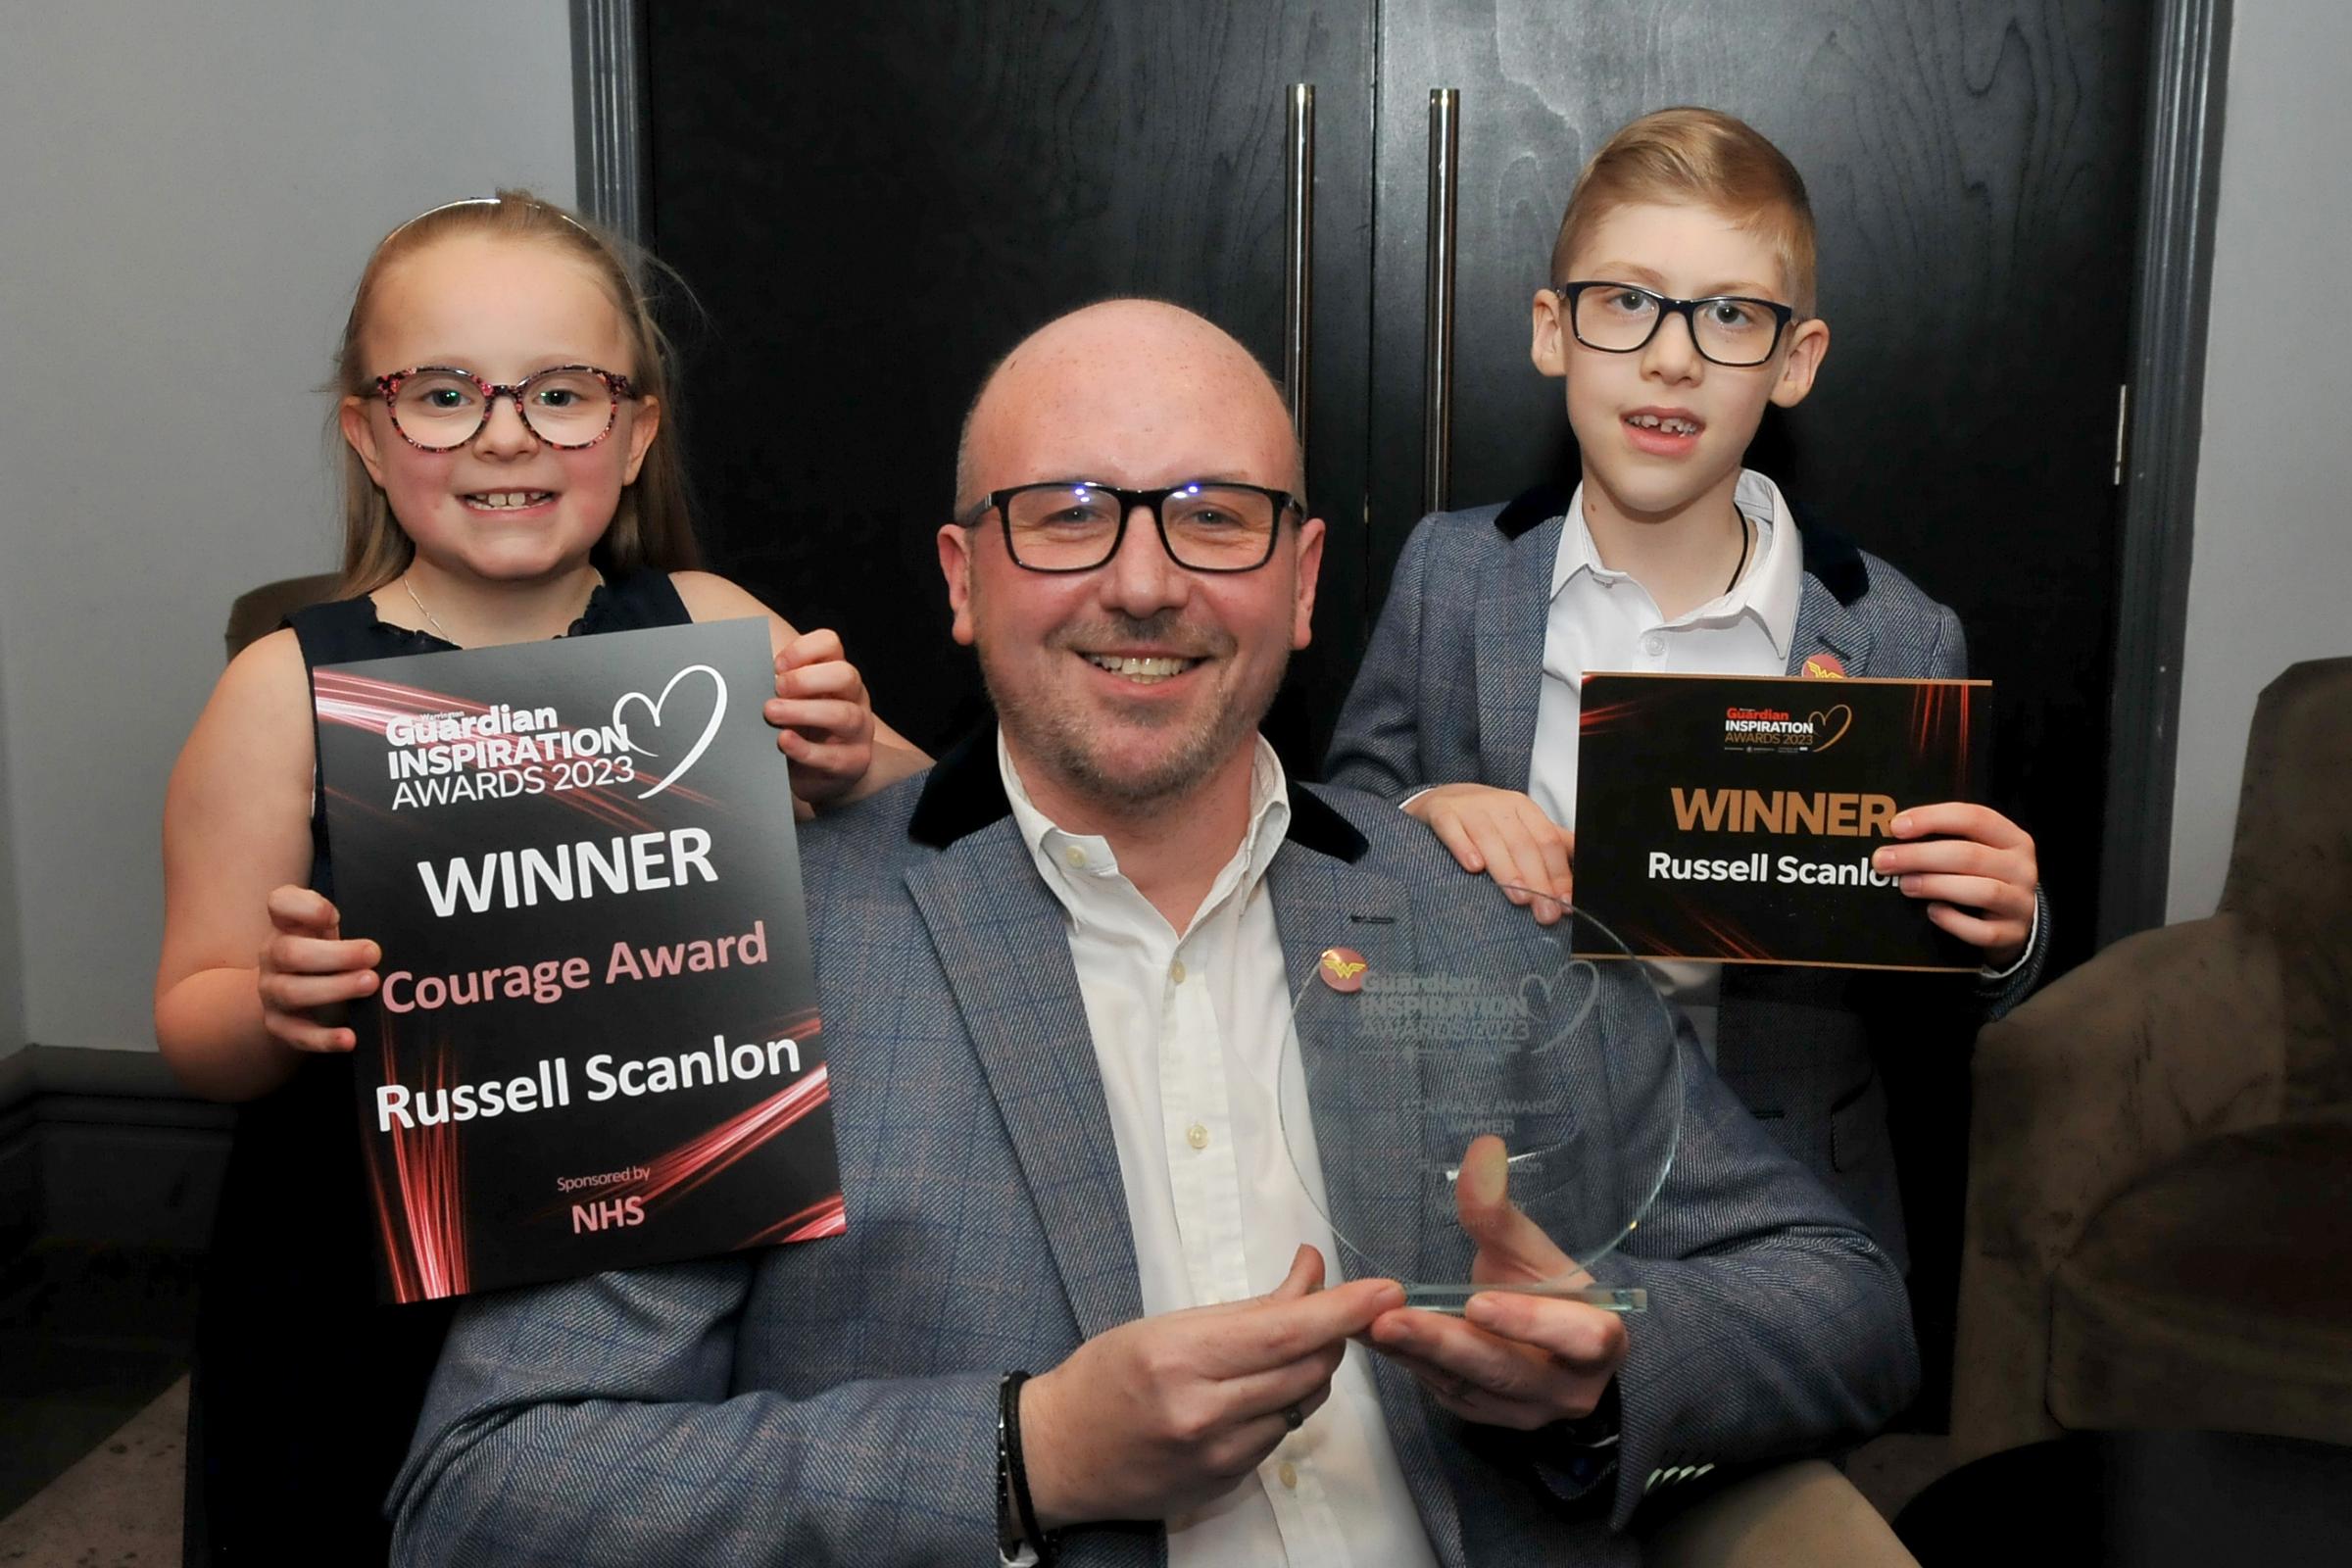 Courage Award winner Russell Scanlon with children Keeva and Logan